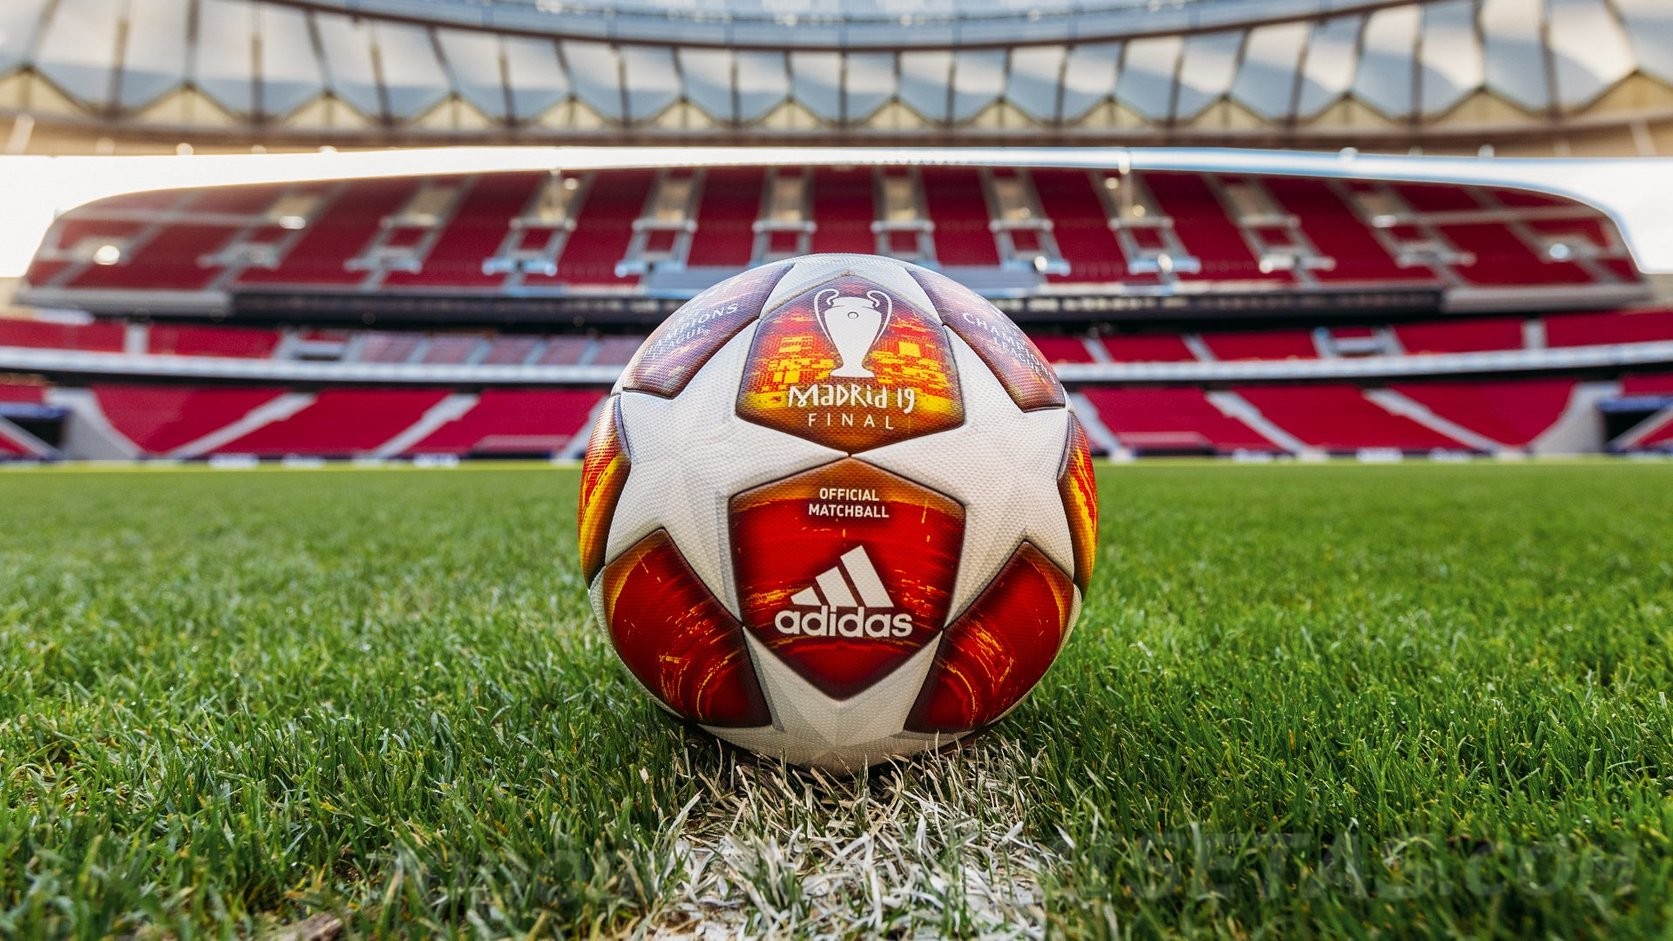 adidas Champions League Finale 2019 Madrid Ball - Todo ...